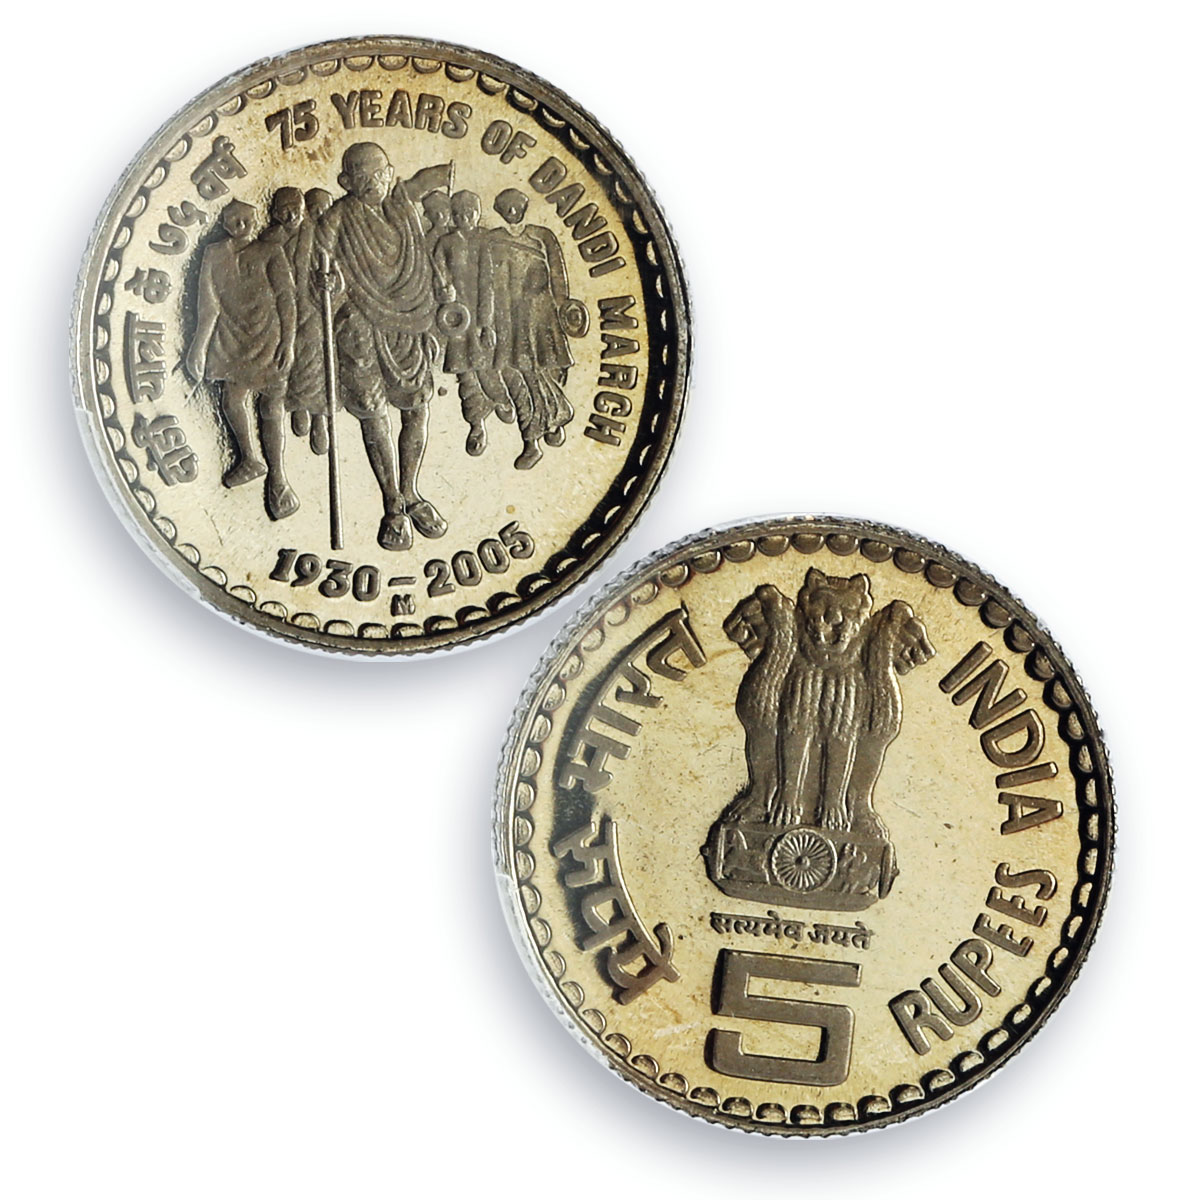 India 5 rupees Mahatma Gandhi Dandi March Politics PR67 PCGS CuNi coin 2005